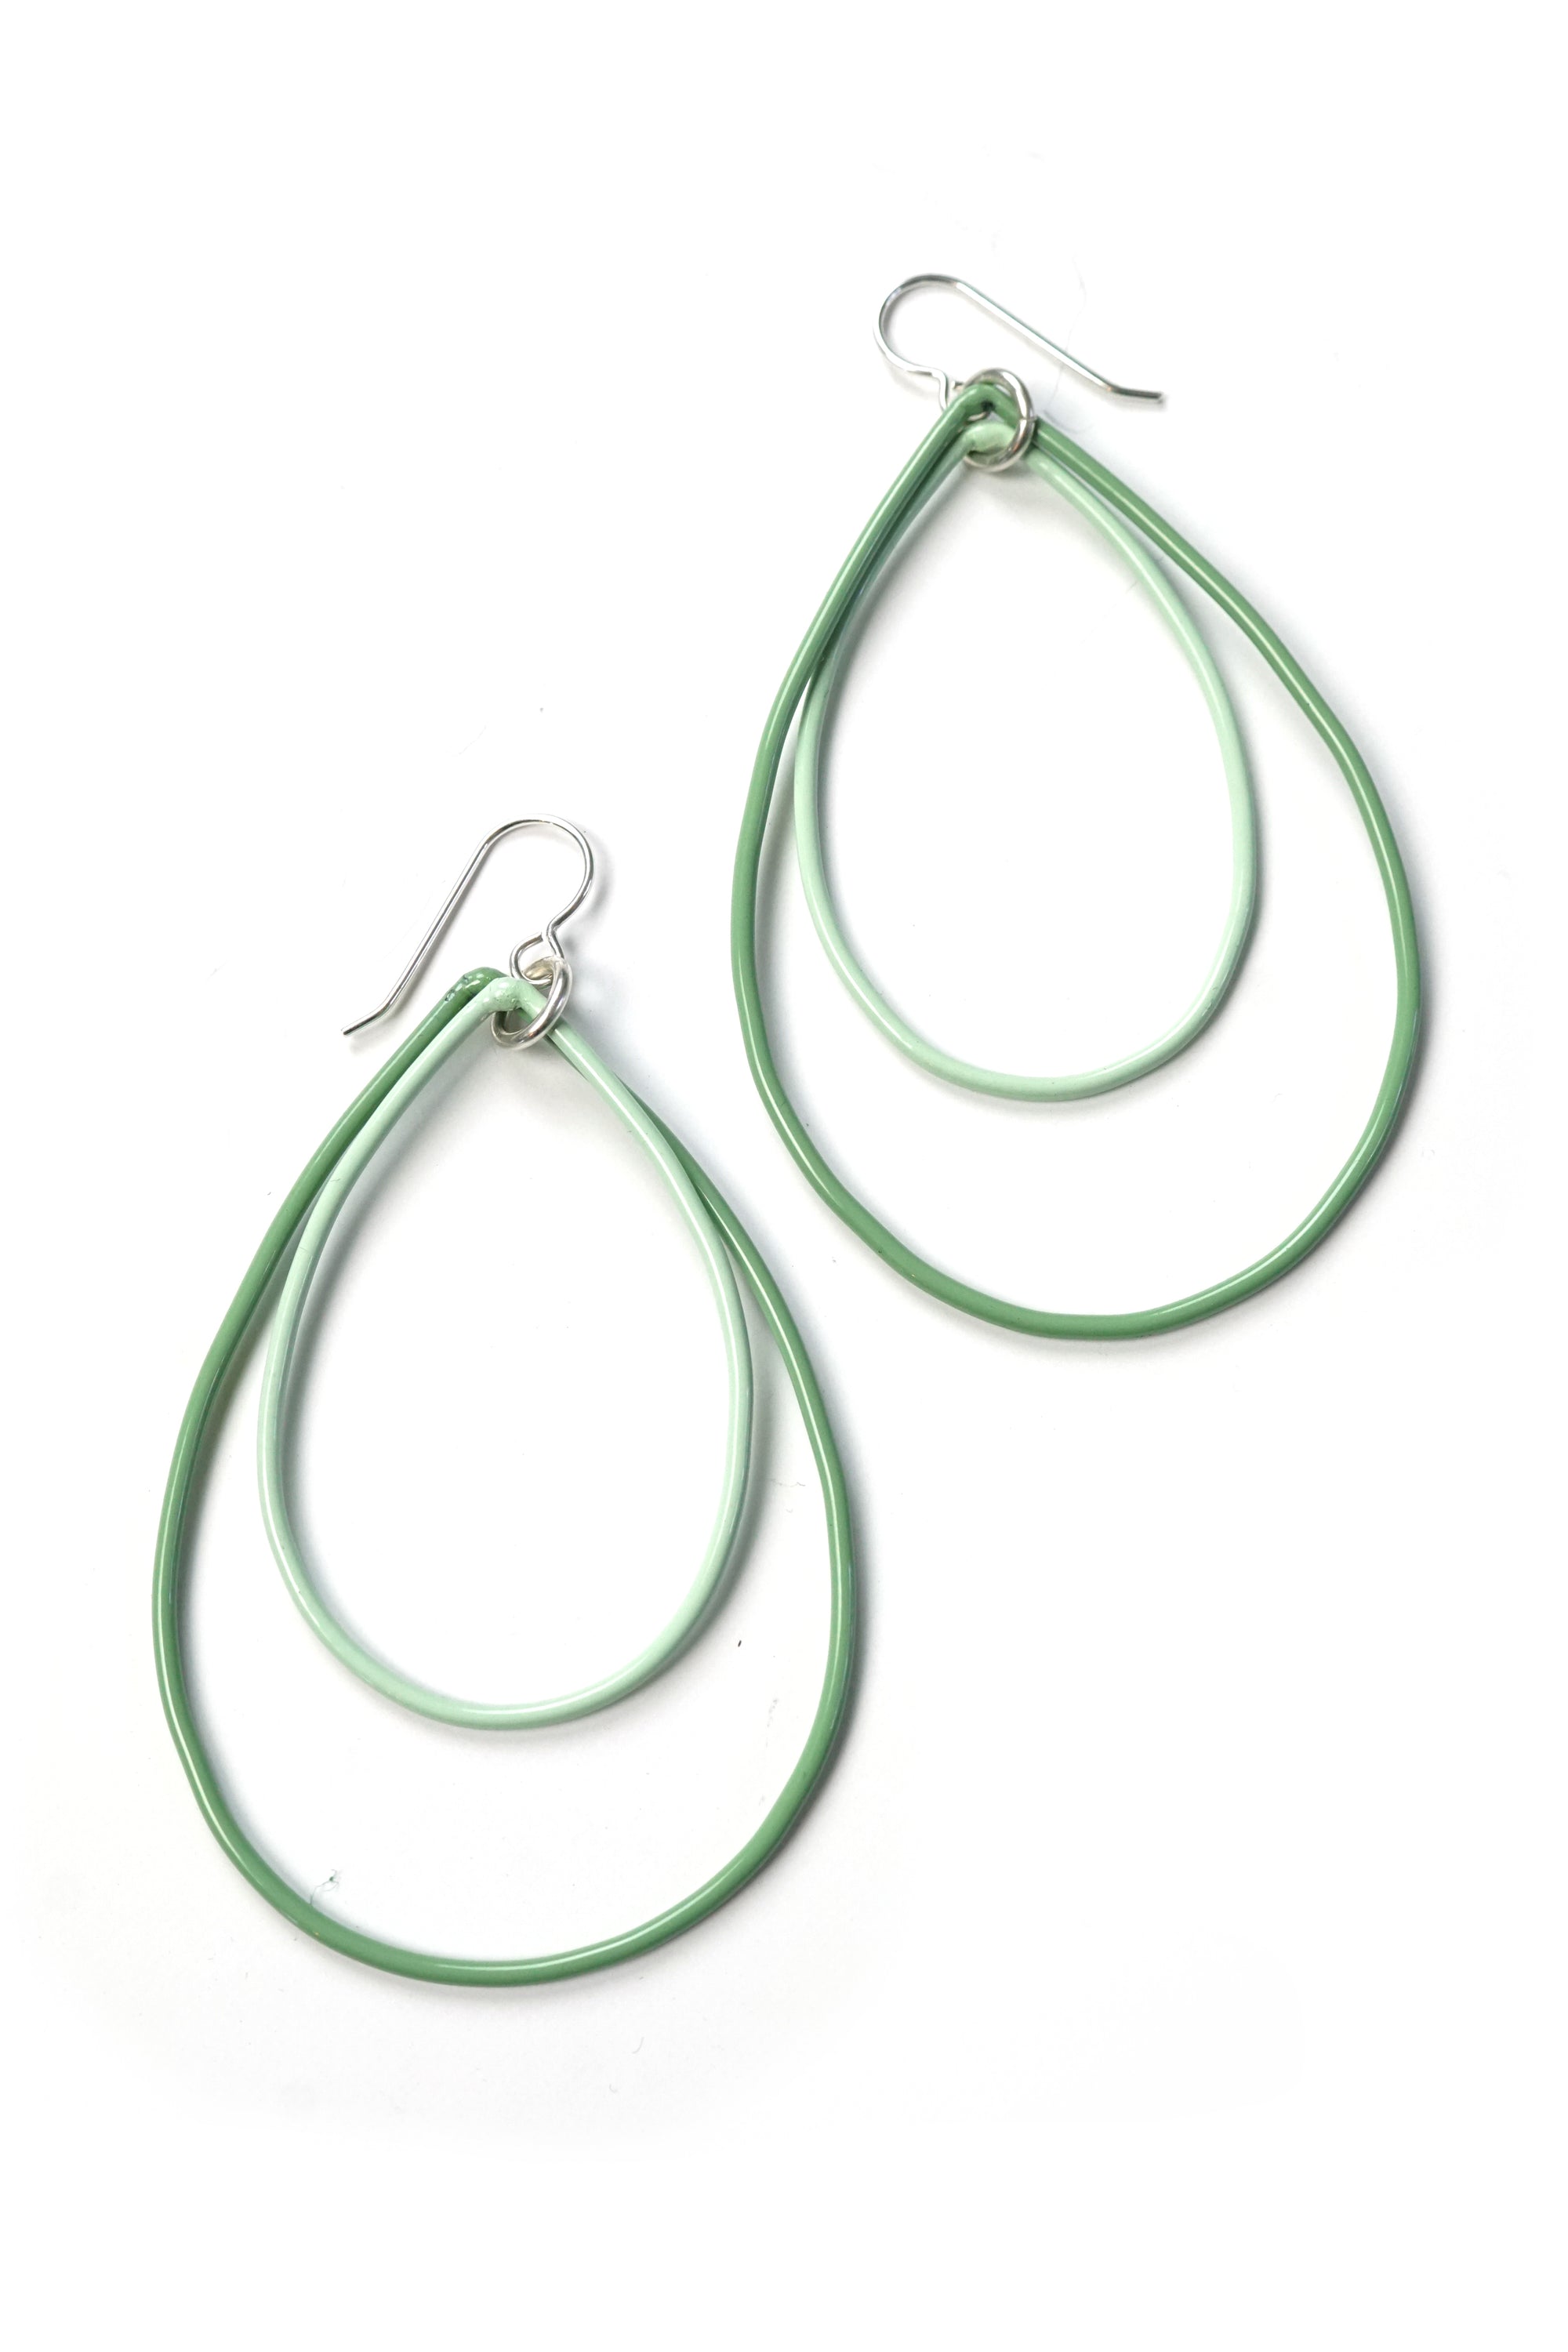 Large Rachel earrings in Pale Green and Soft Mint